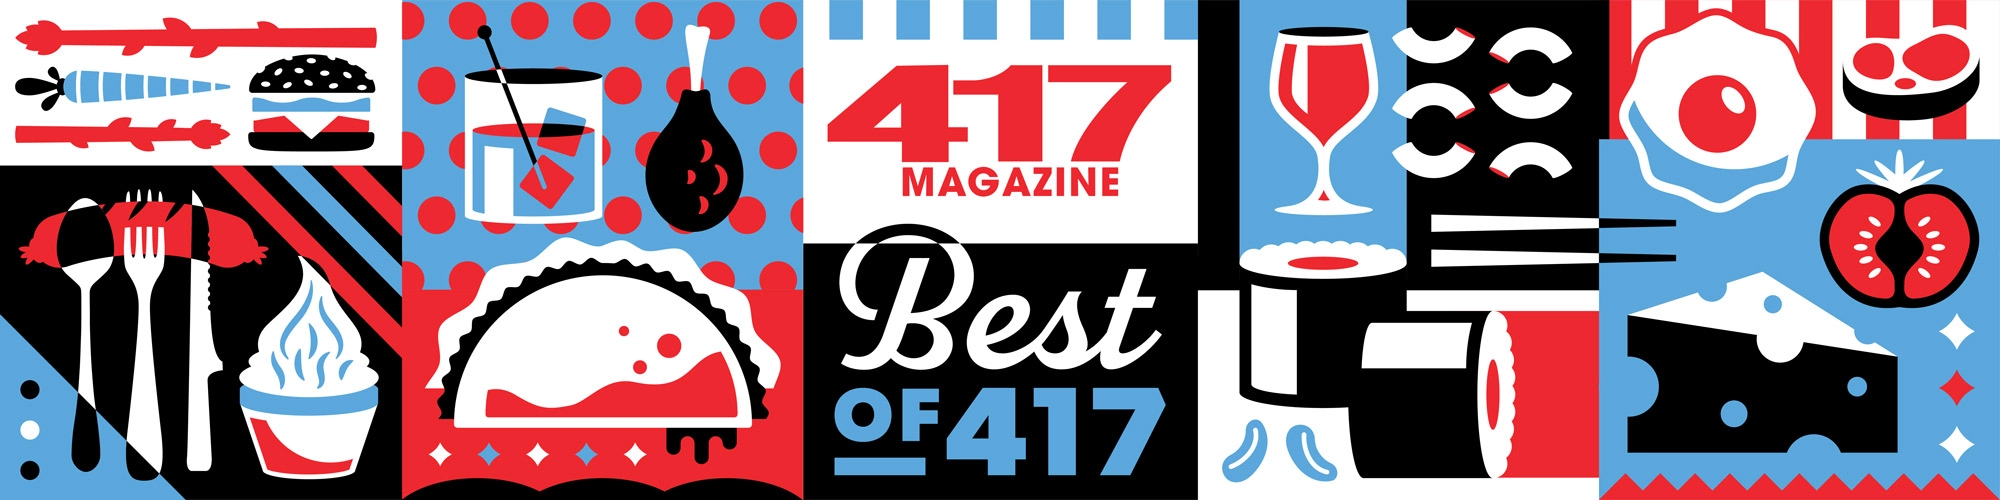 417 Magazine's Best of 417 Voting